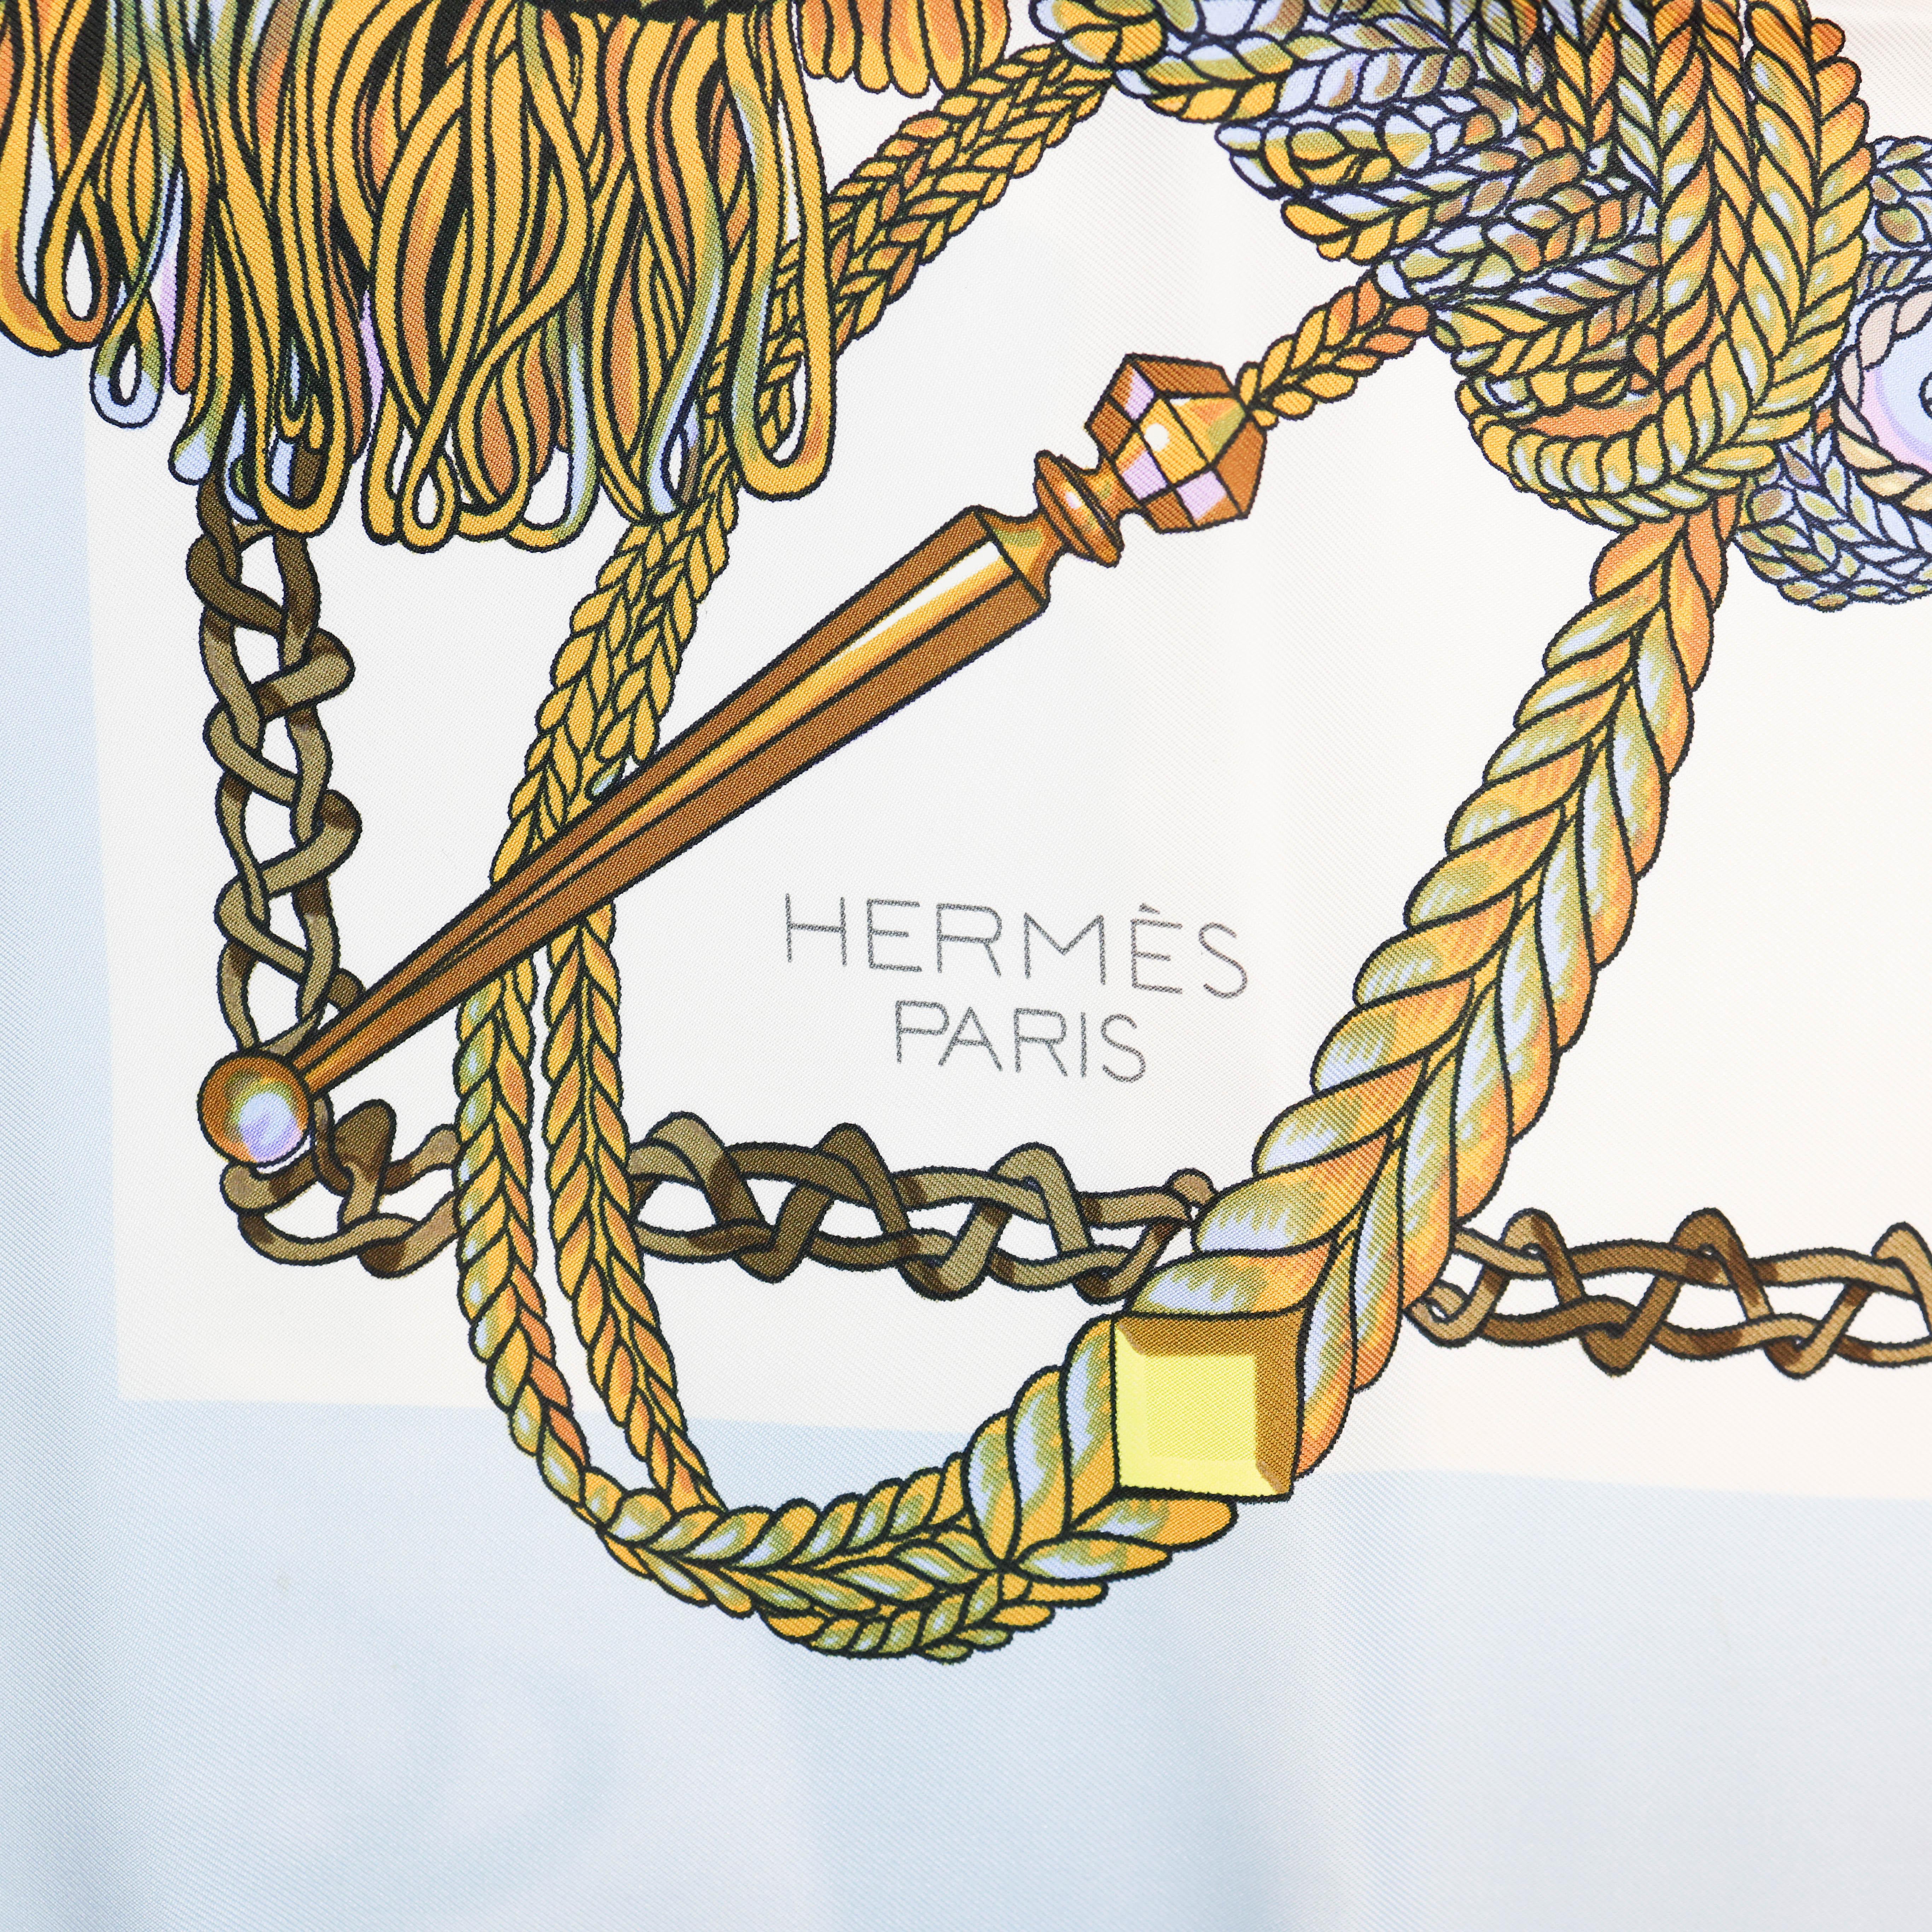 Women's or Men's Hermès 